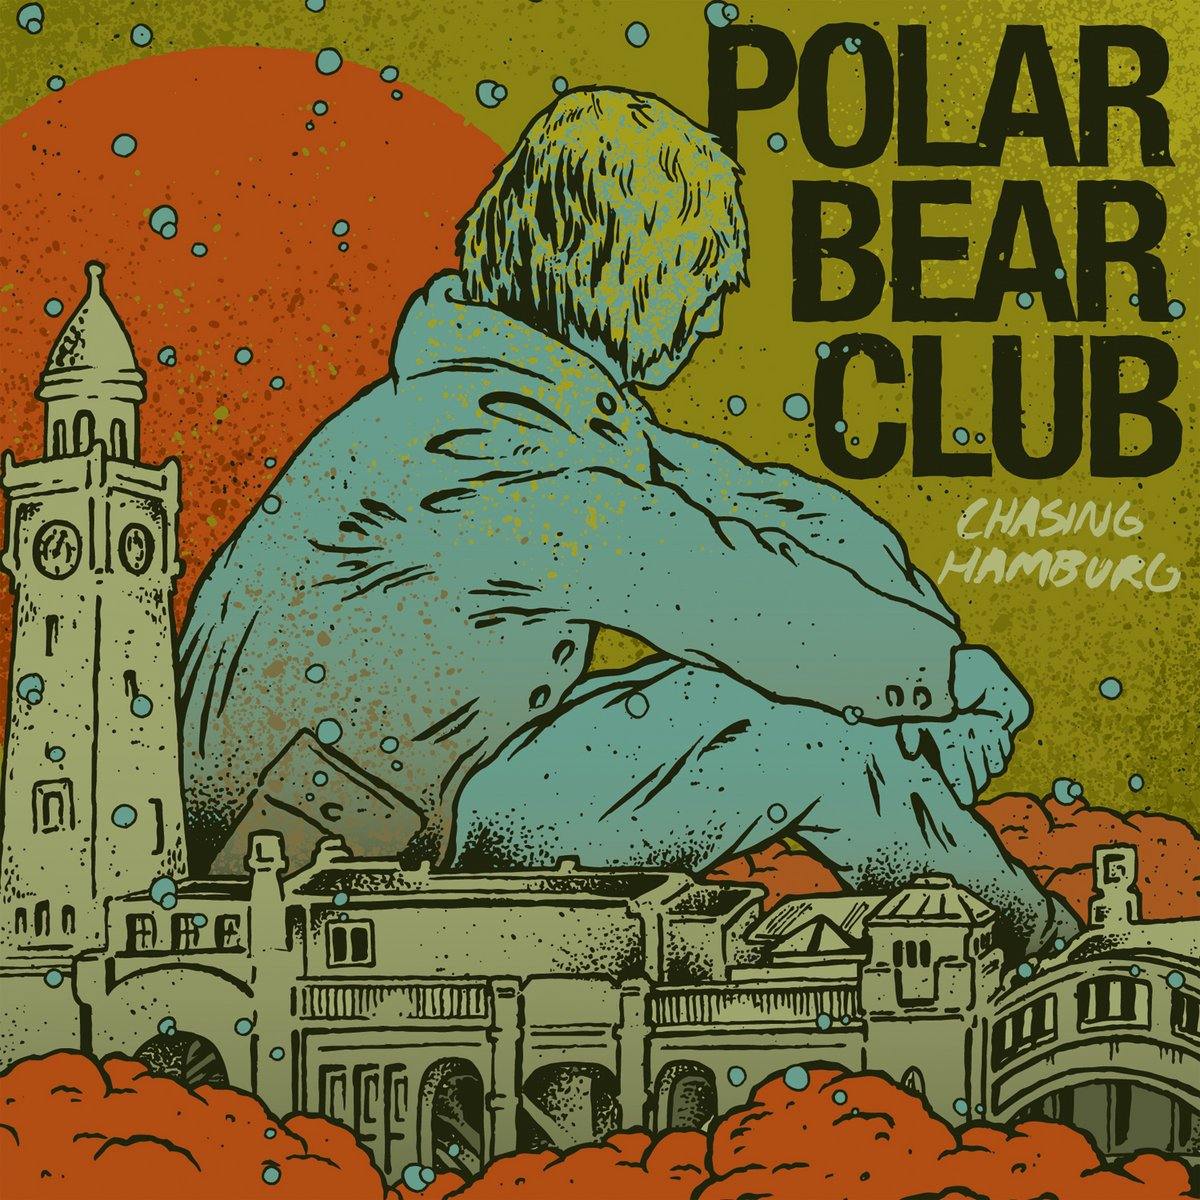 Buy – Polar Bear Club "Chasing Hamburg" CD – Band & Music Merch – Cold Cuts Merch